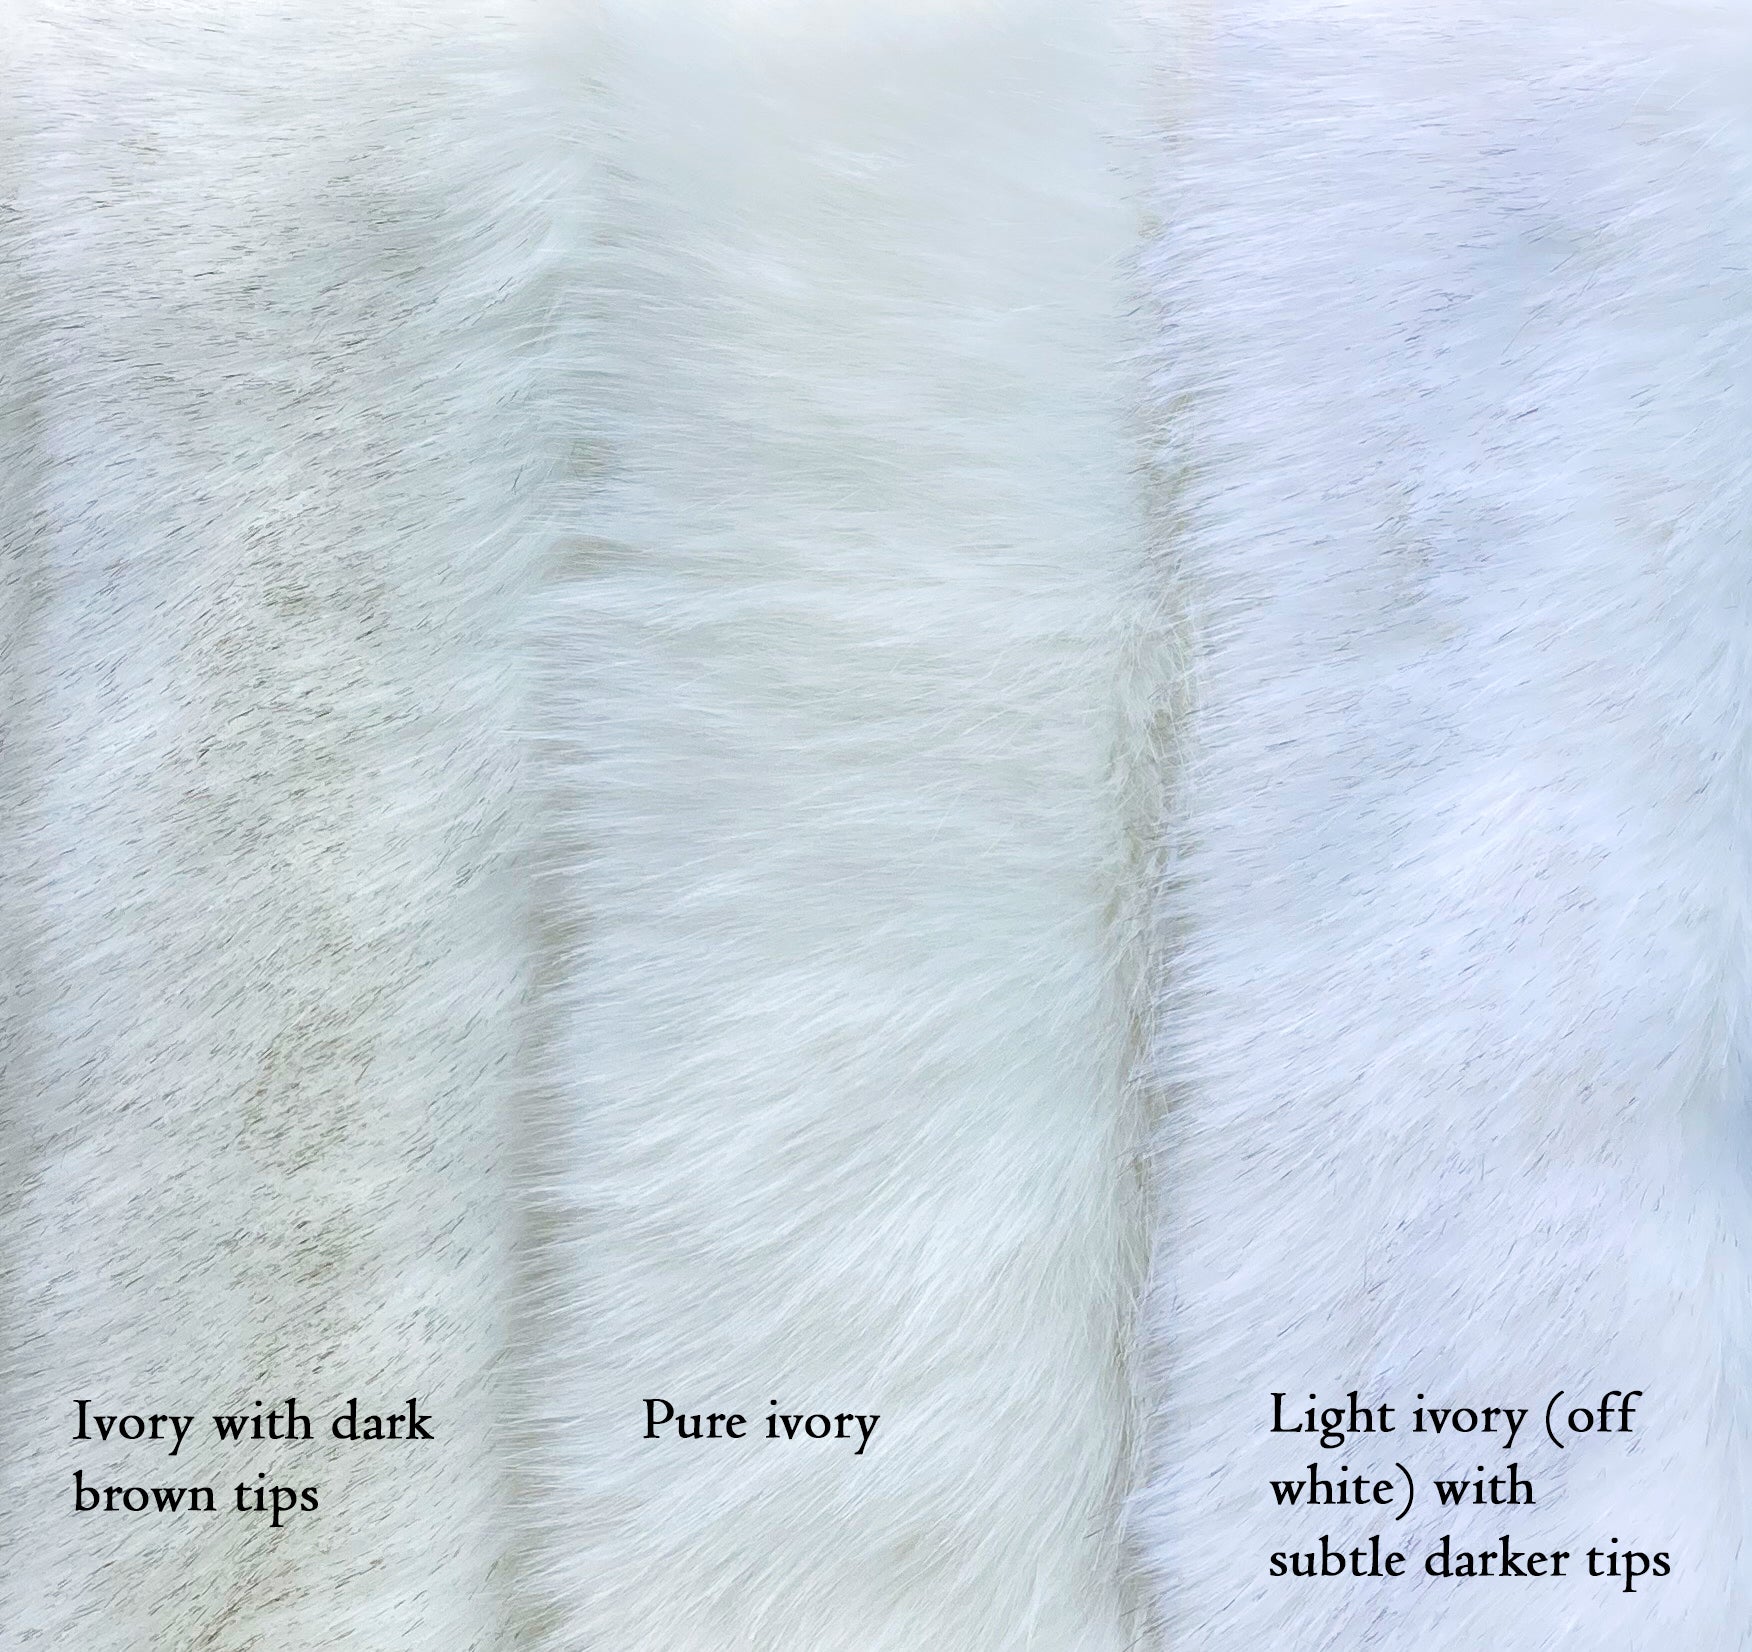 Ivory faux fur wrap bridal shawl